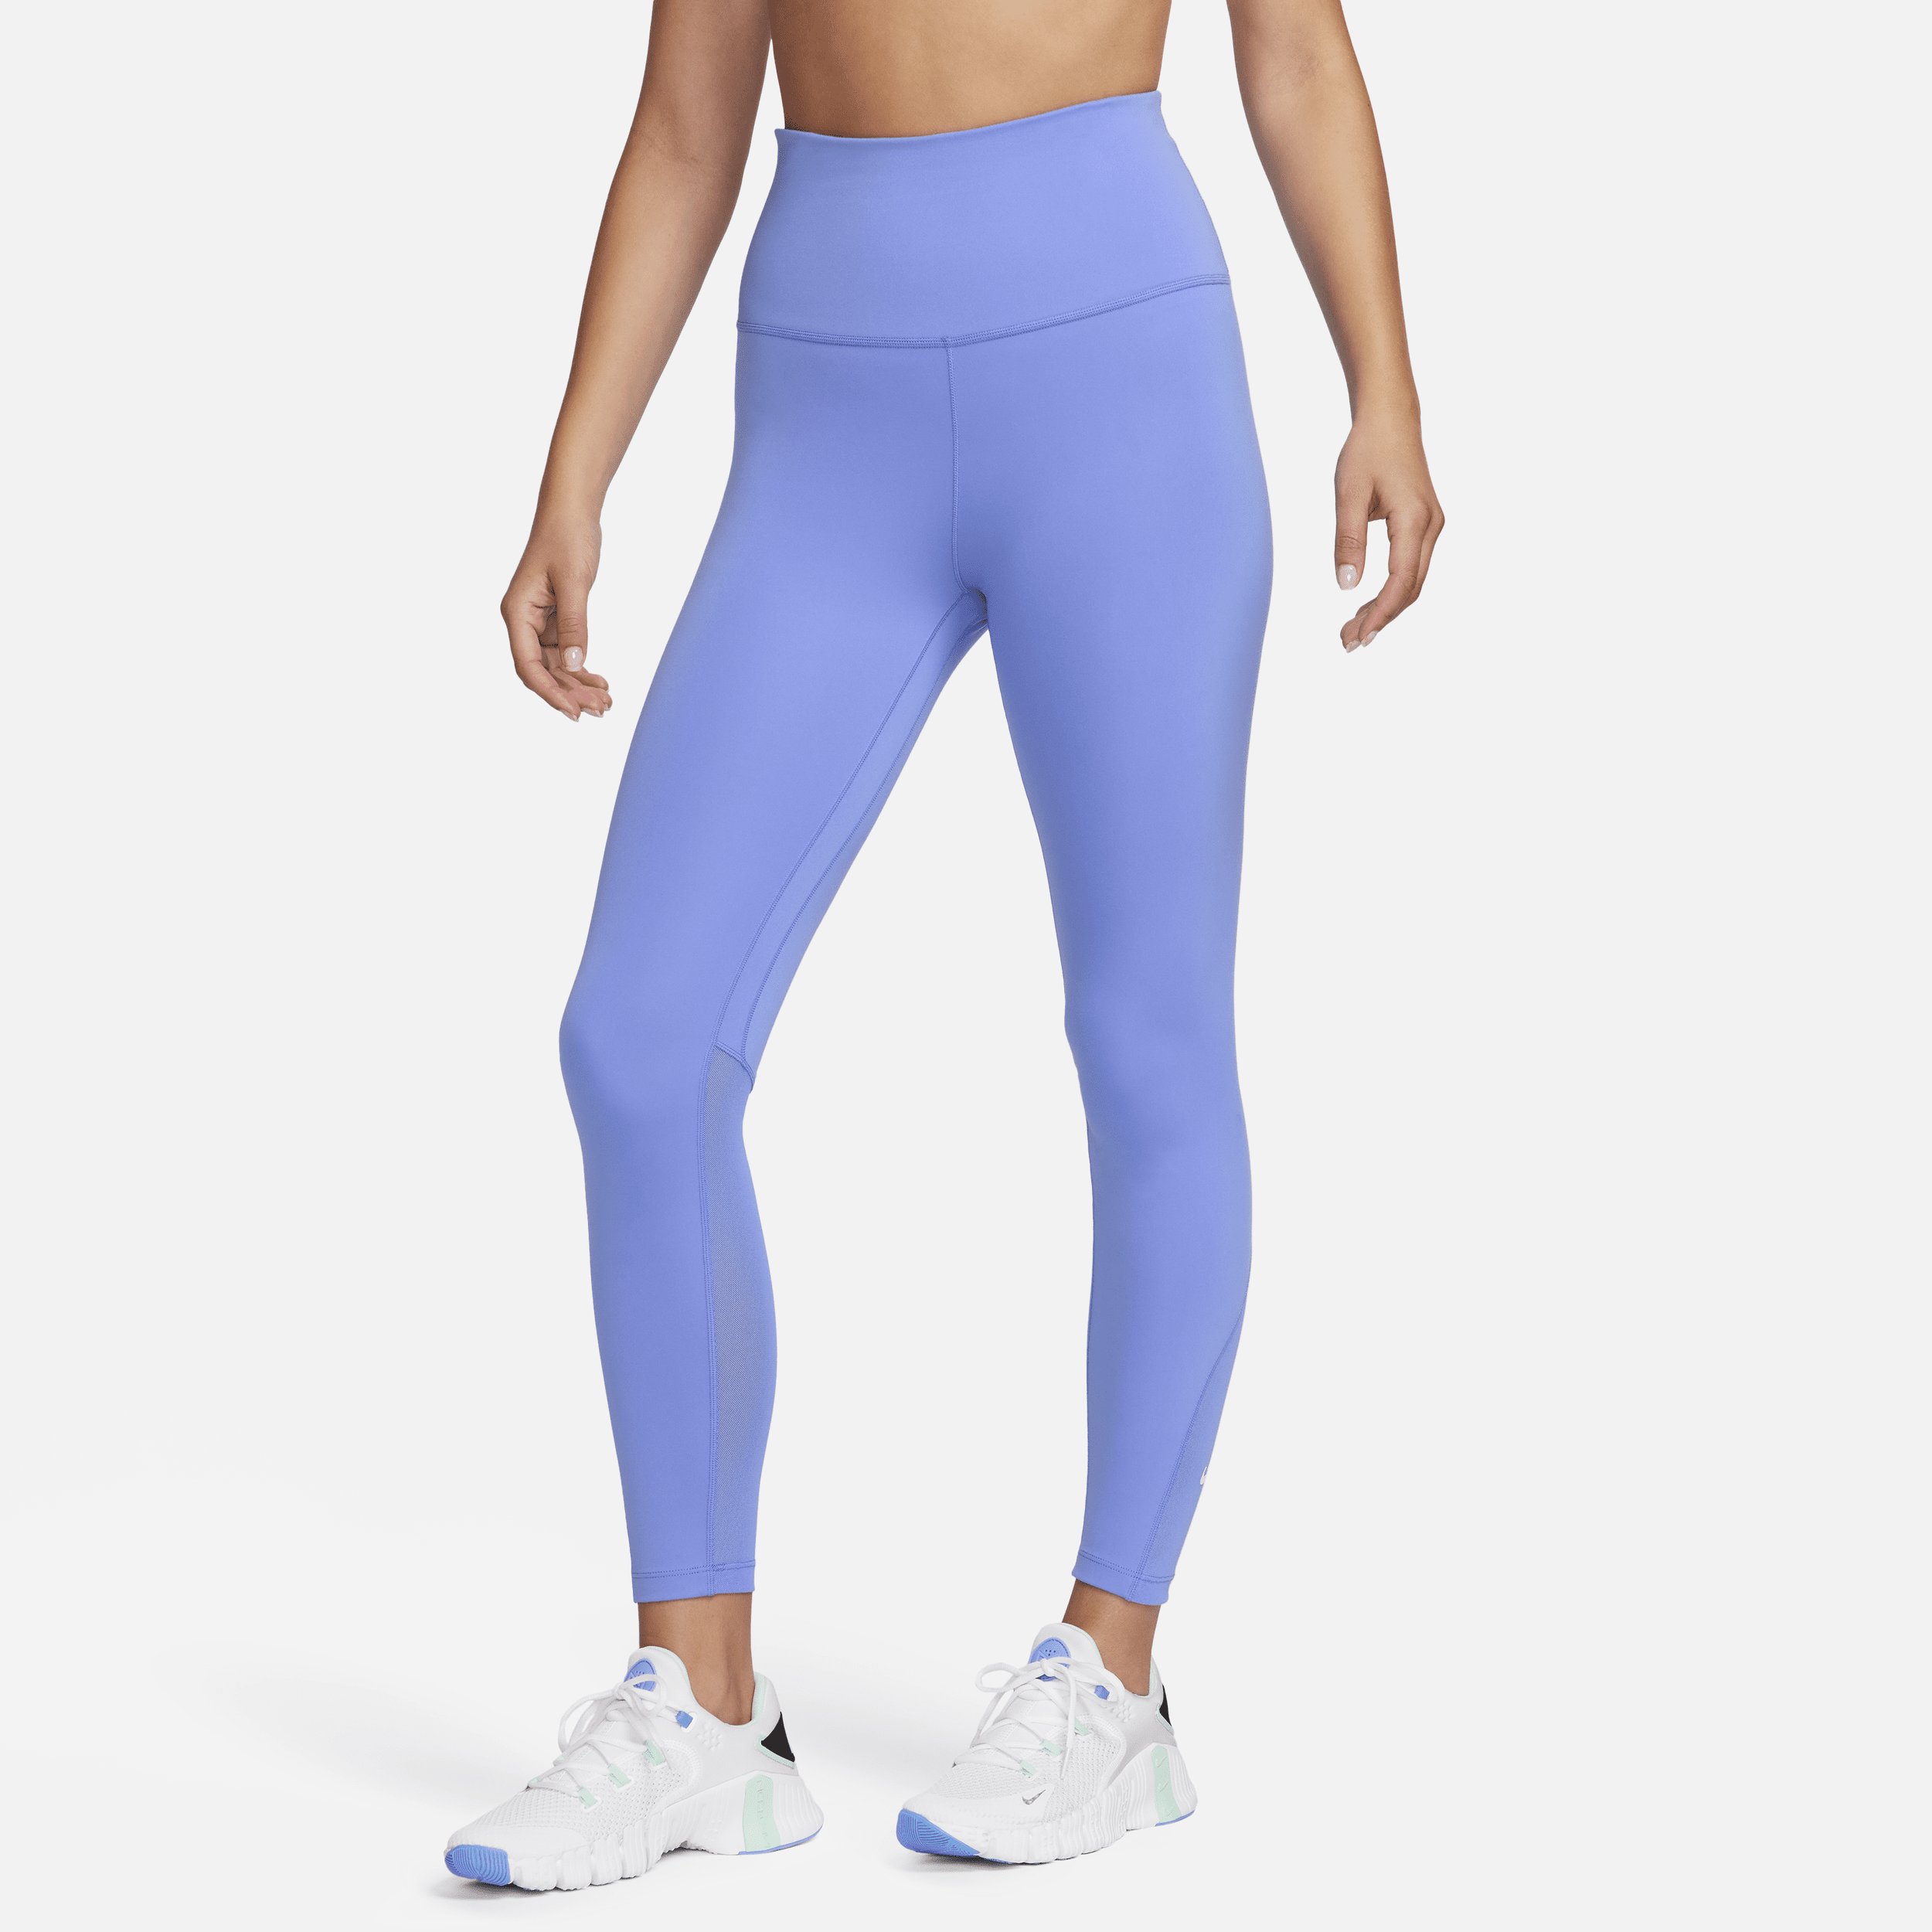 Nike One 7/8-legging met hoge taille voor dames - Blauw